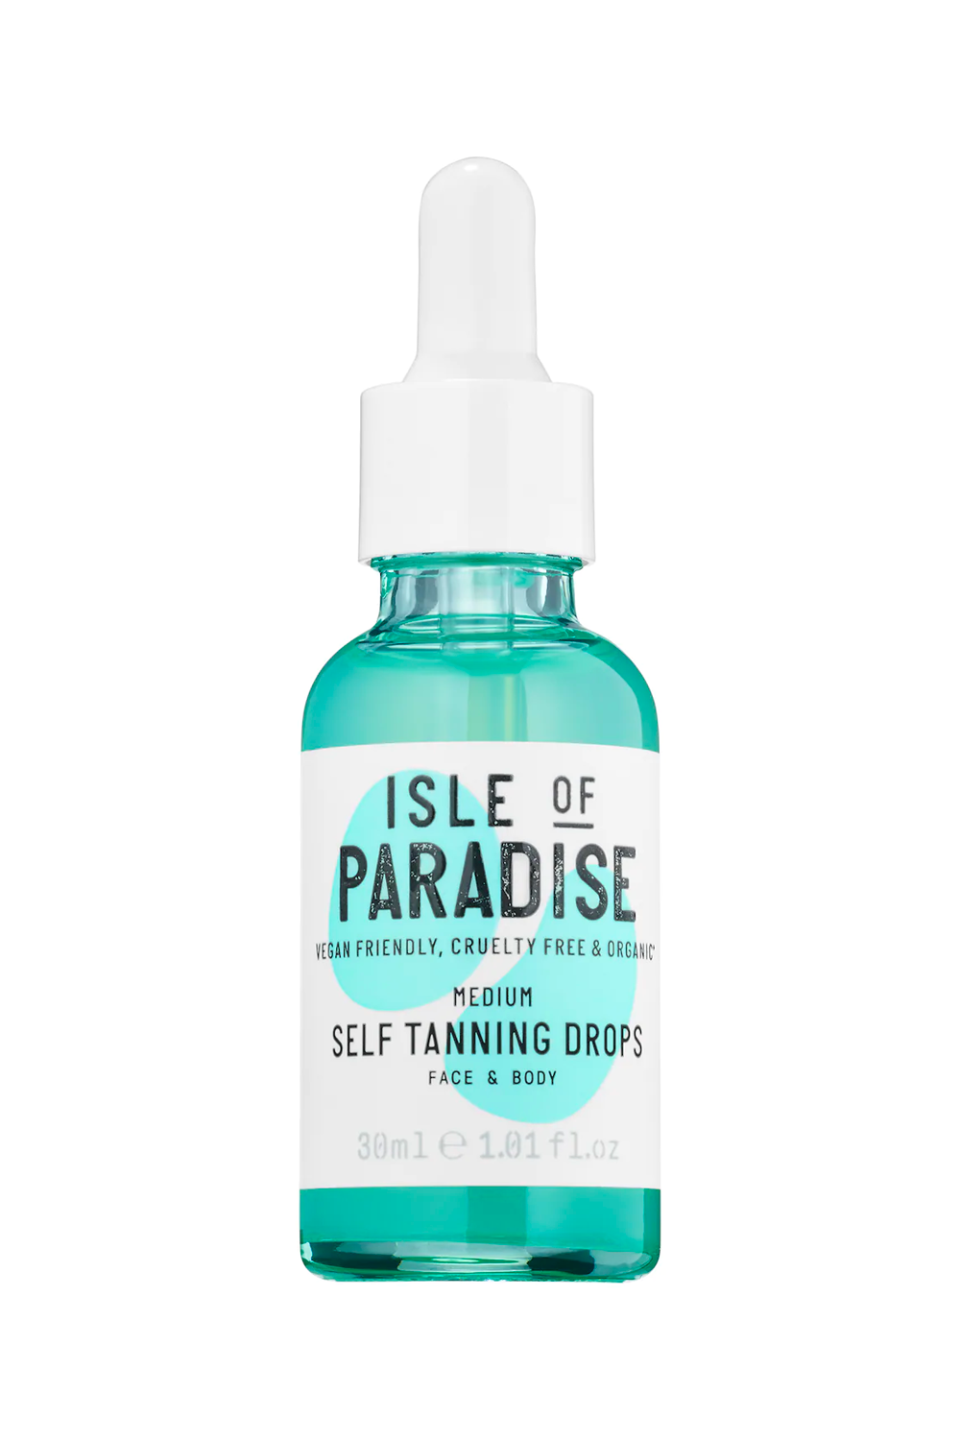 4) Isle of Paradise Self Tanning Drops